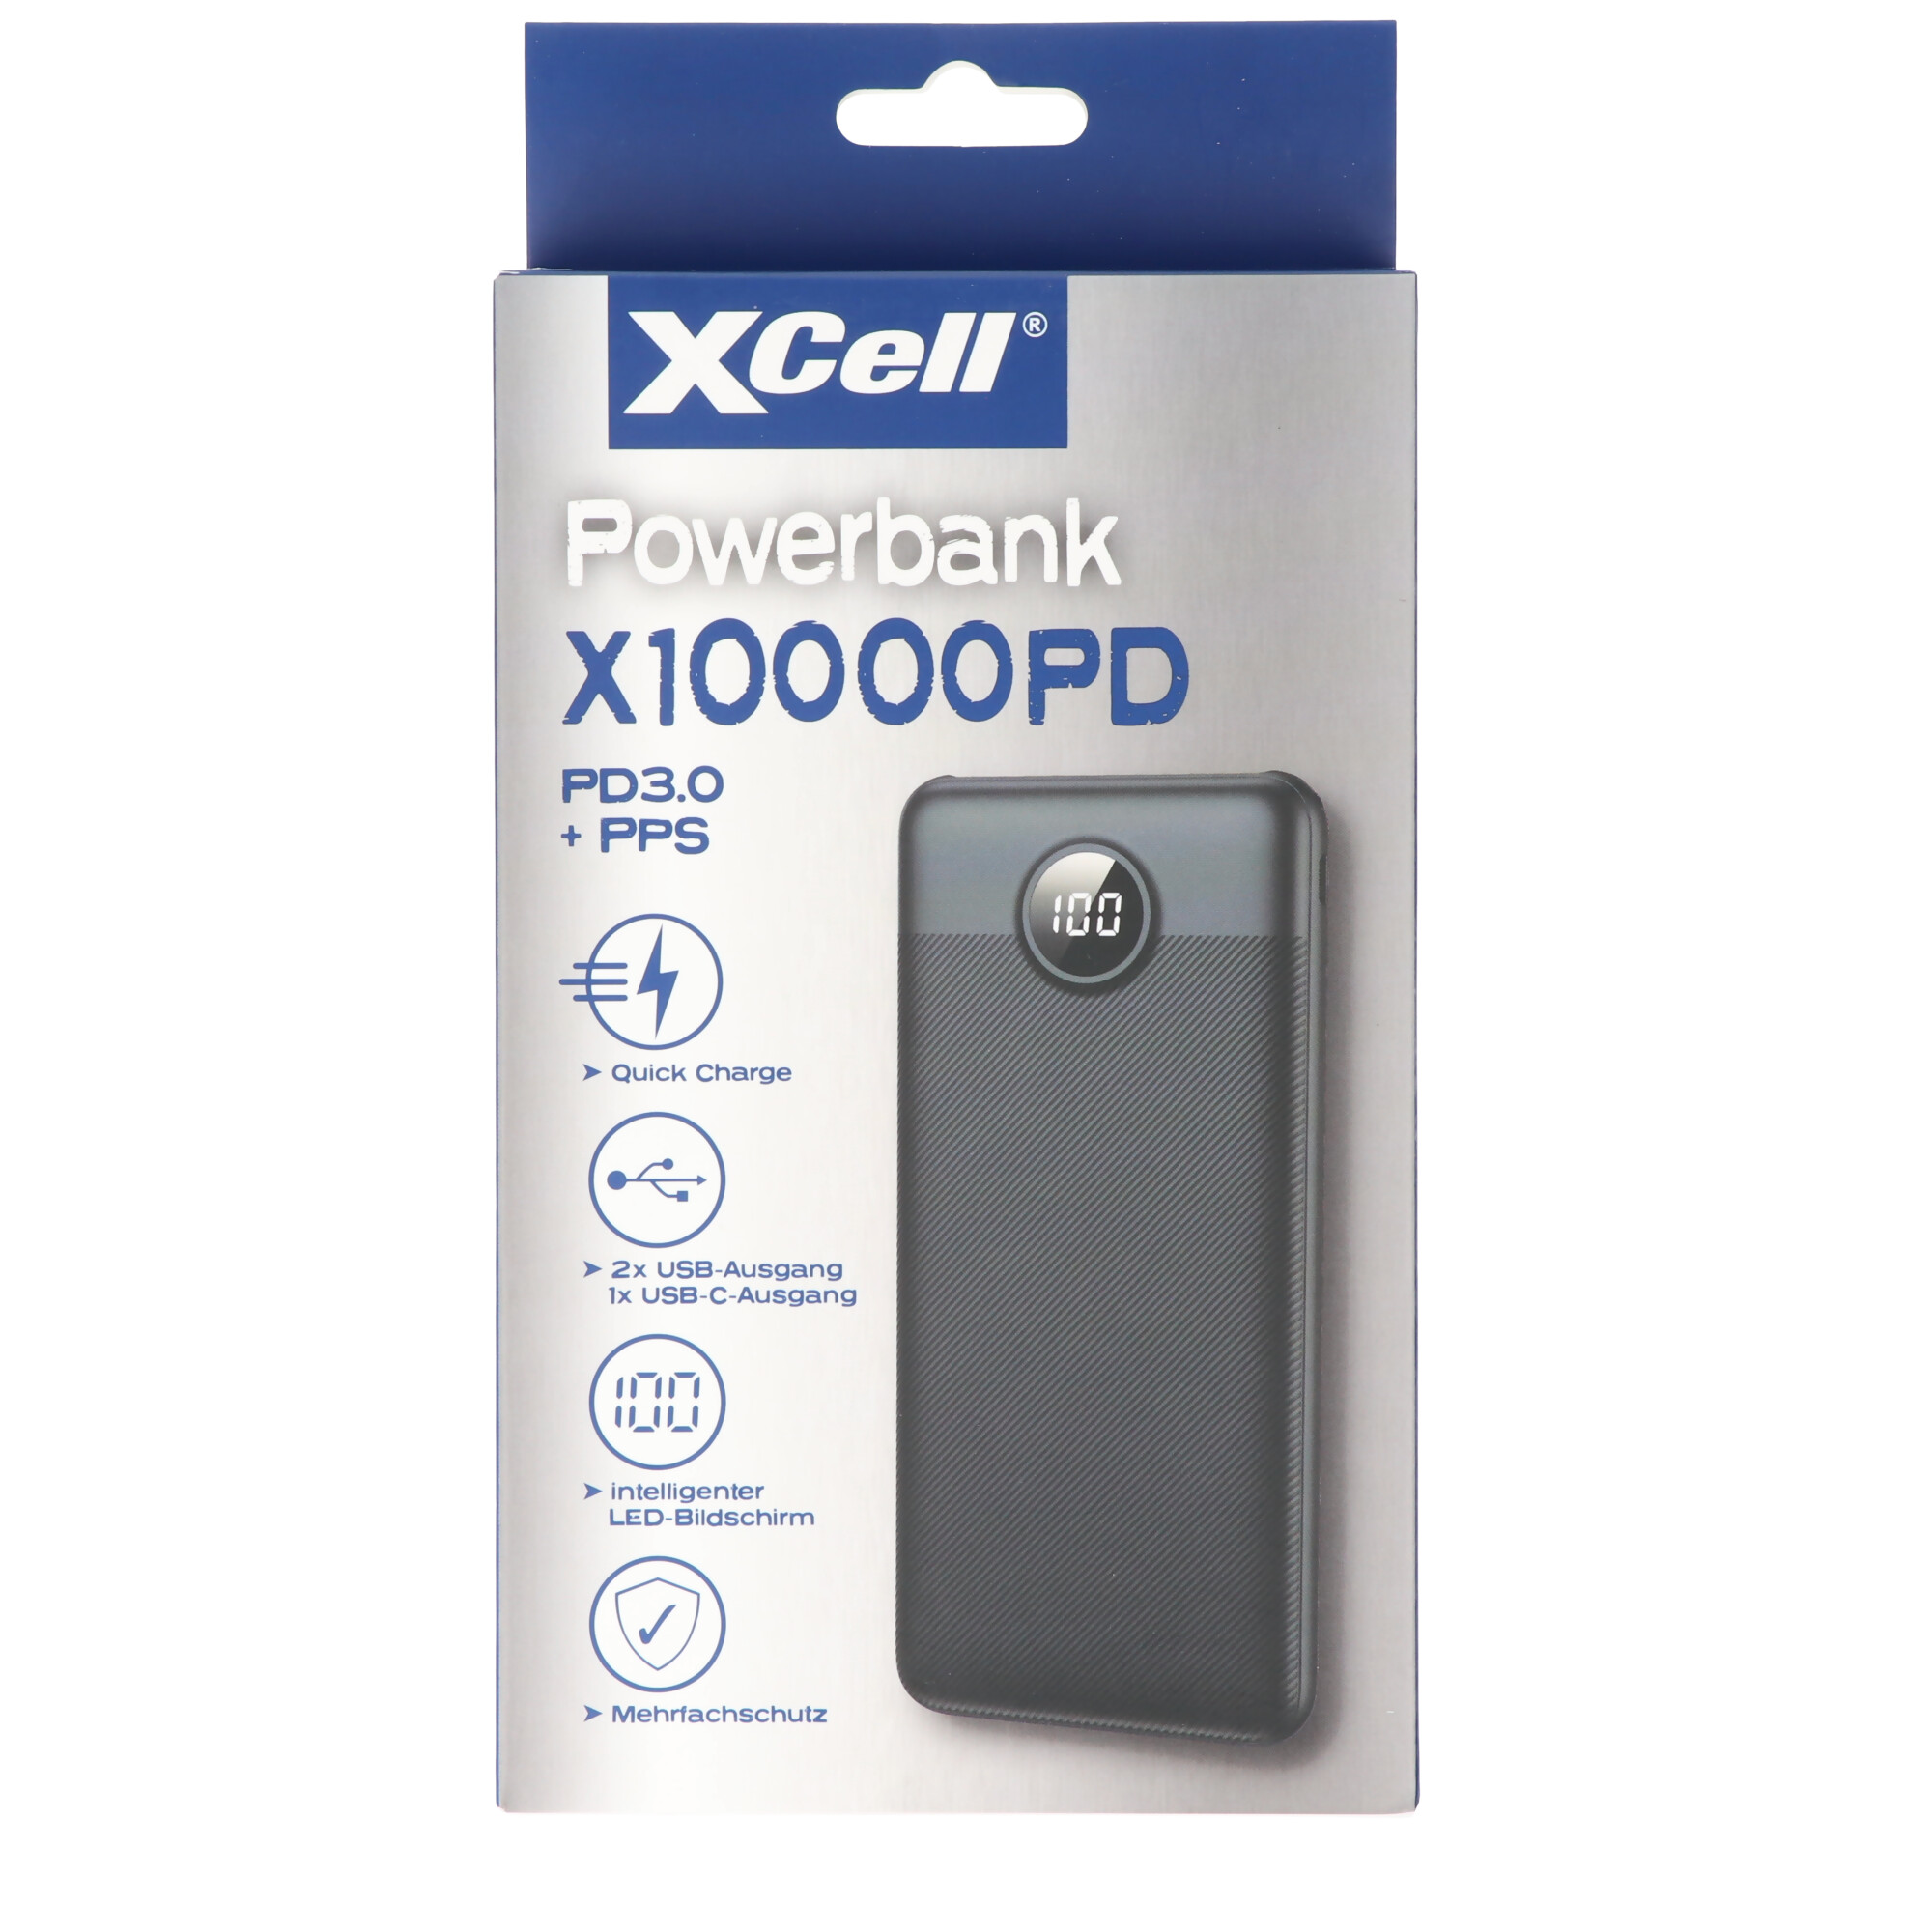 XCell Powerbank X10000PD mit 10.000mAh Kapazität, USB-C PD3.0, Quick-Charge, LED-Display, 2x USB-Ausgang 1x USB-C-Ausgang